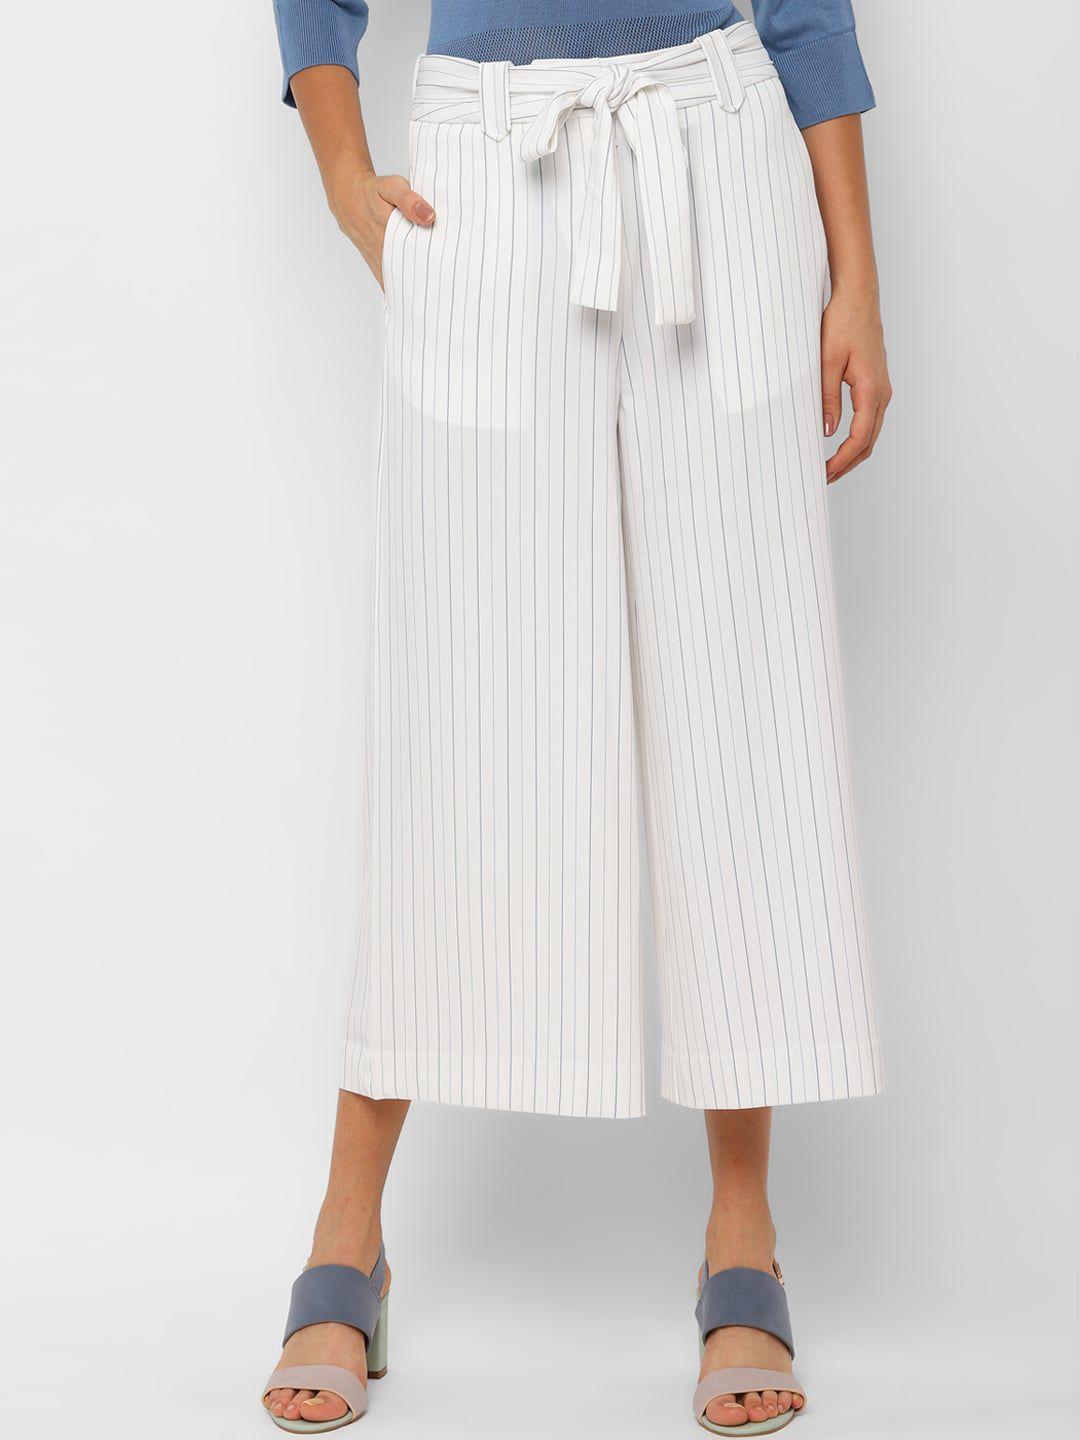 allen solly woman women white striped culottes trousers